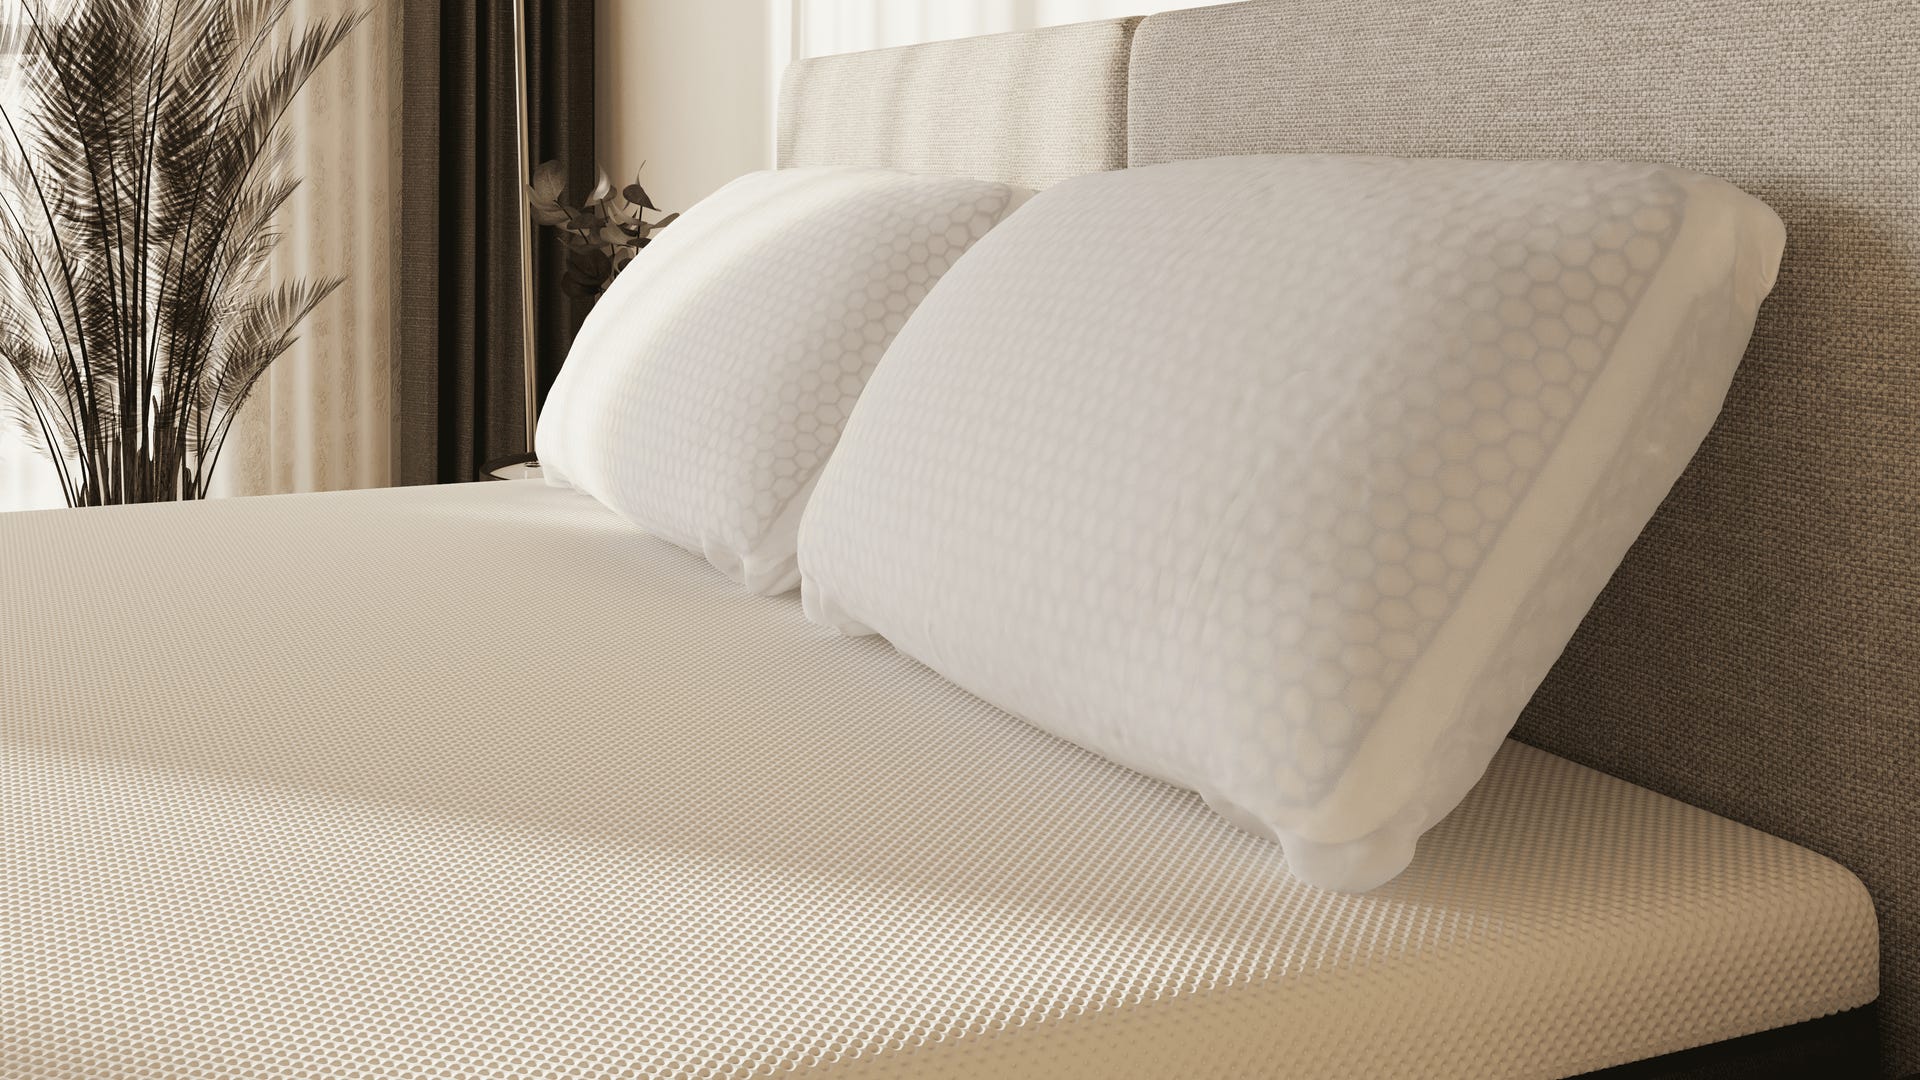 Colchón + almohadas Emma Sleep Hybrid Premium confort firme